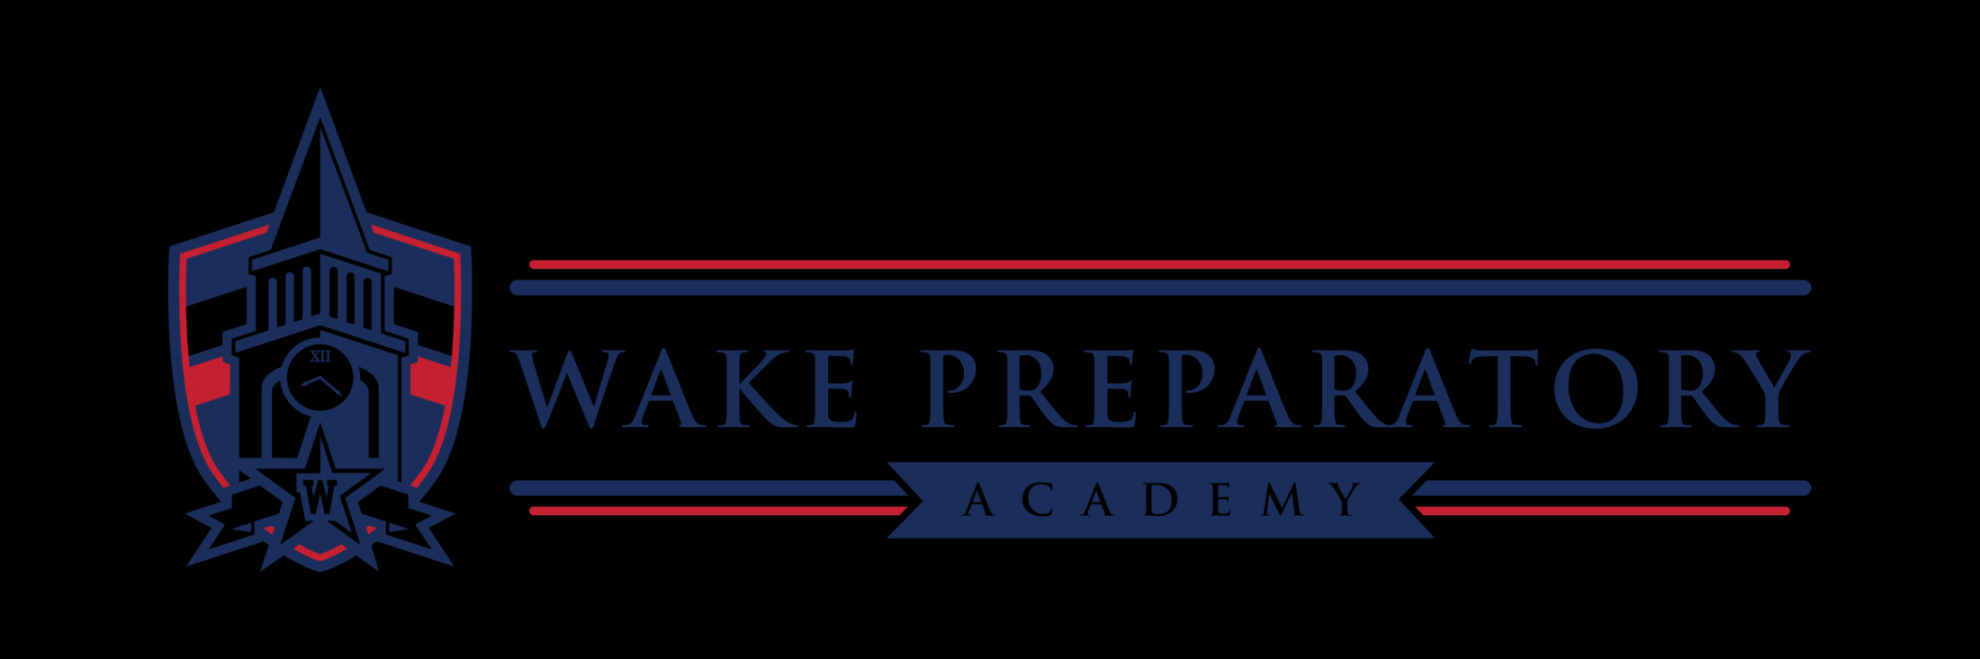 Tuition Free Charter School  Wake Preparatory Academy